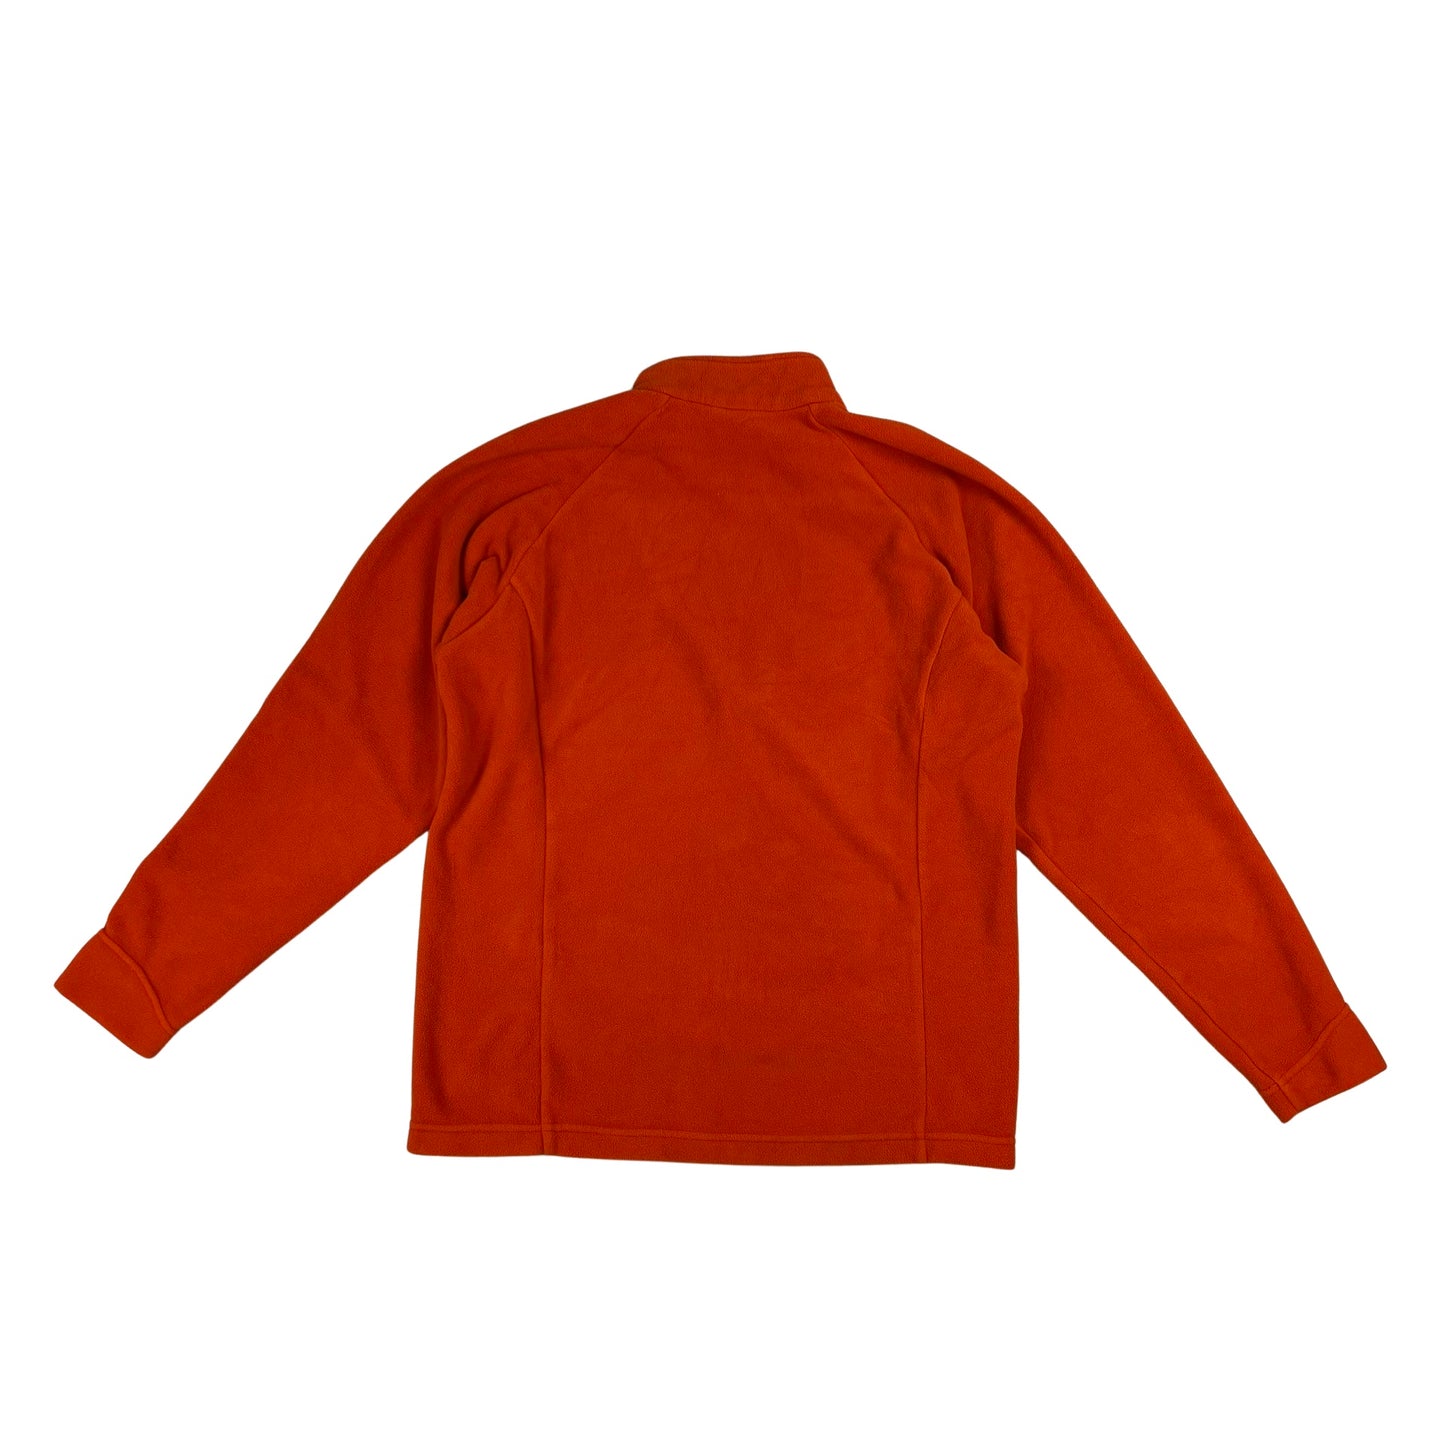 Vintage Montbell Quarter Zip Fleece Pullover Orange S M